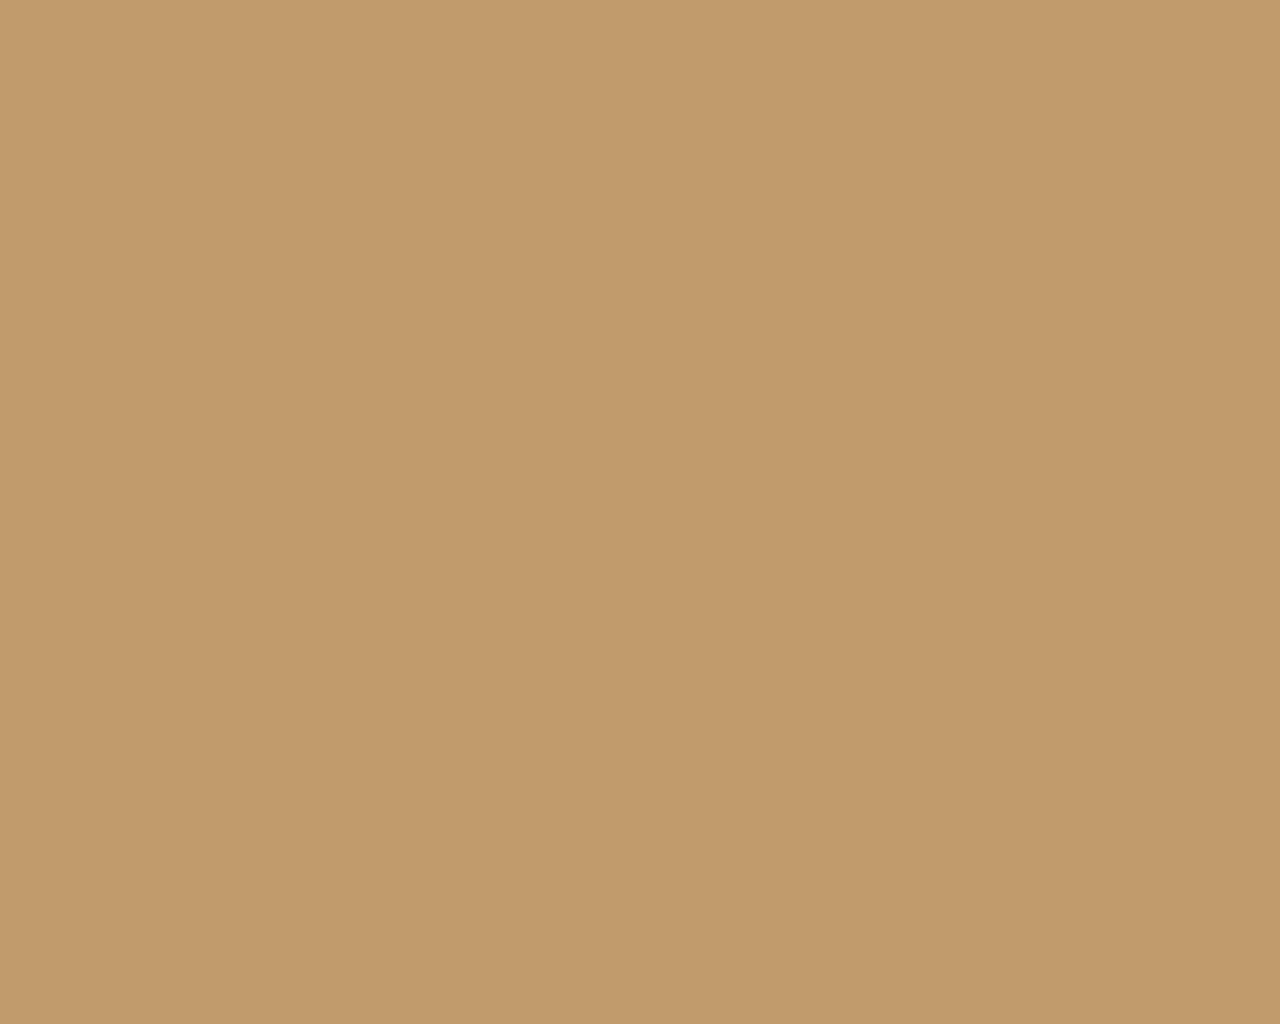 1280x1024 Desert Solid Color Background